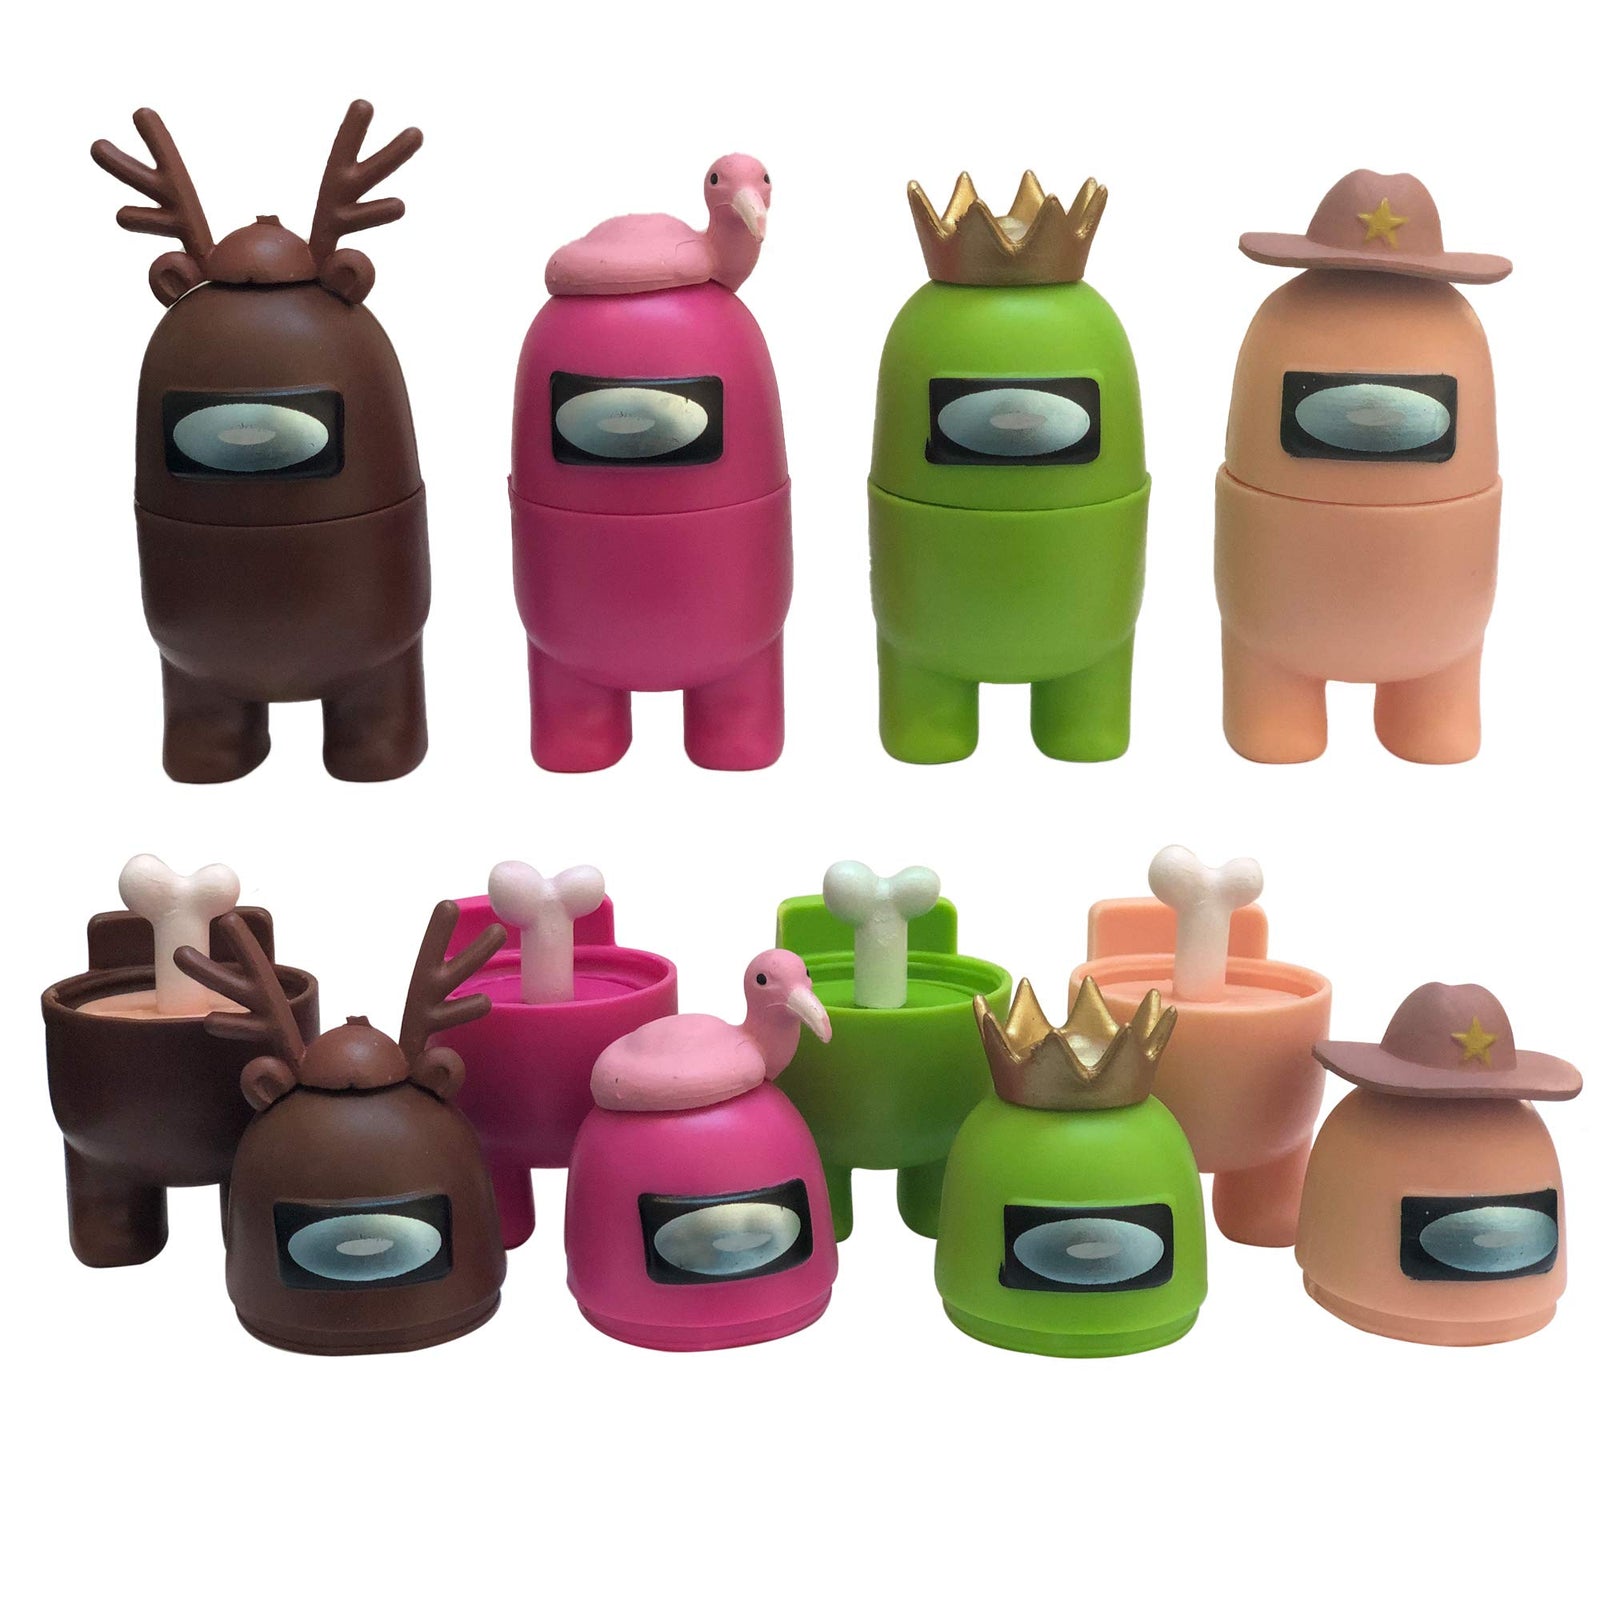 FATIZONE 12Pcs PVC Toys Action Figures Set | Mini Game Figures Desk Character Model Toys, Cake Decorations Impostor